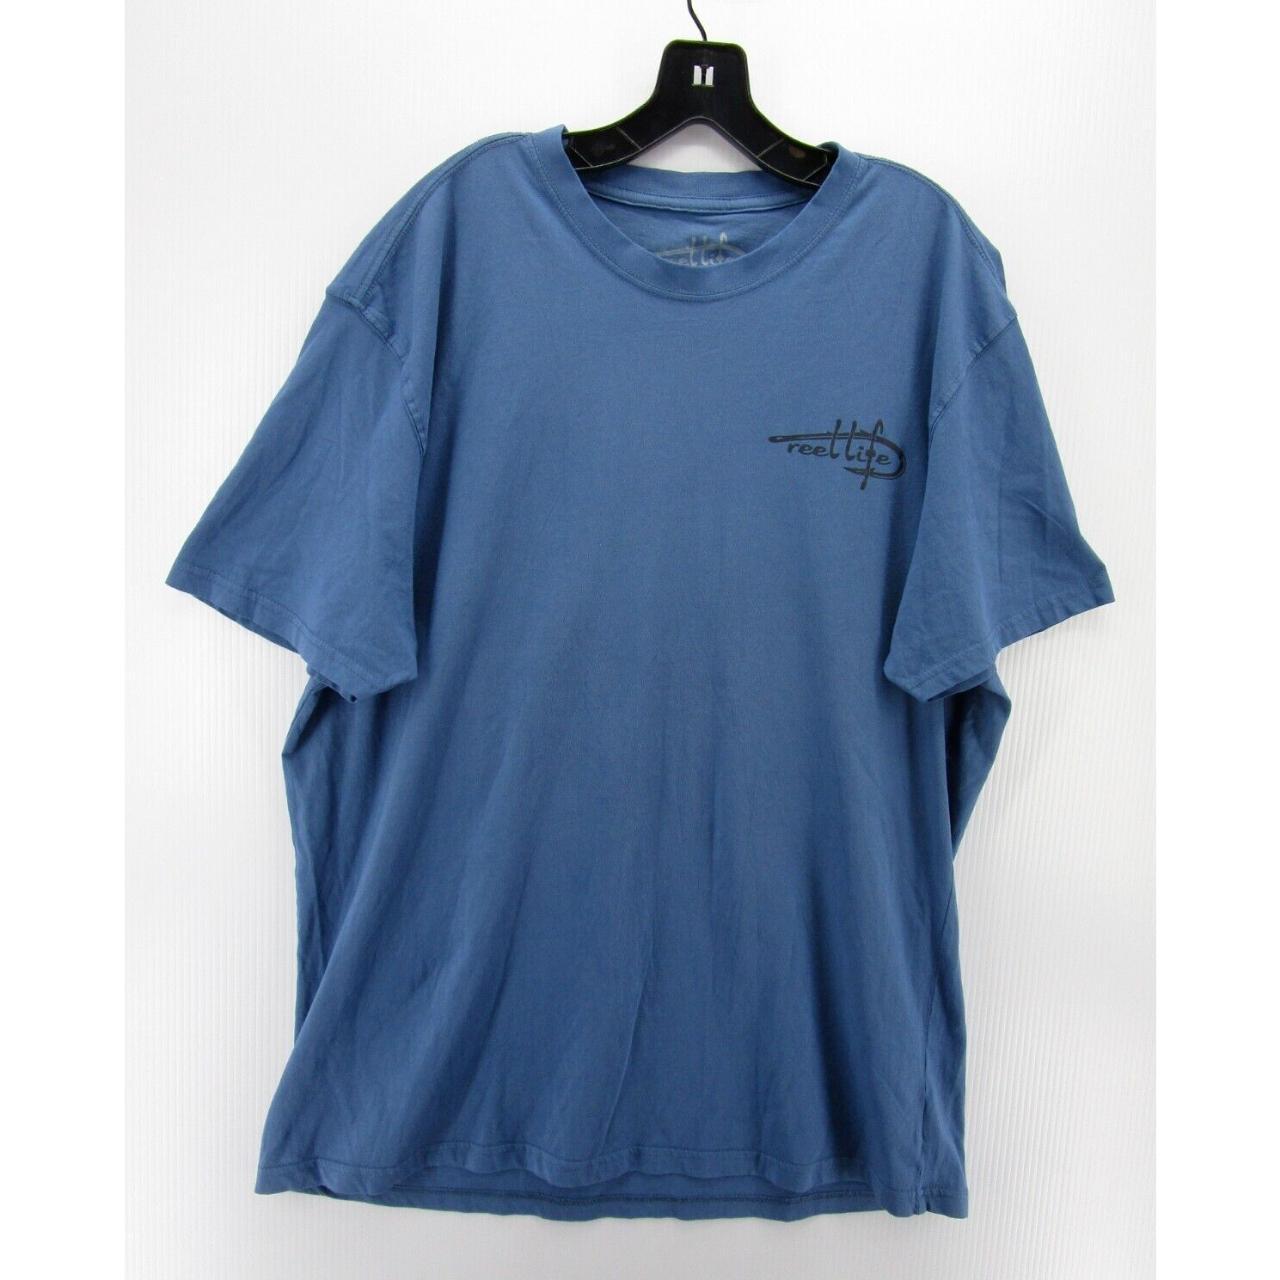 Natural Life Men's T-Shirt - Blue - XL